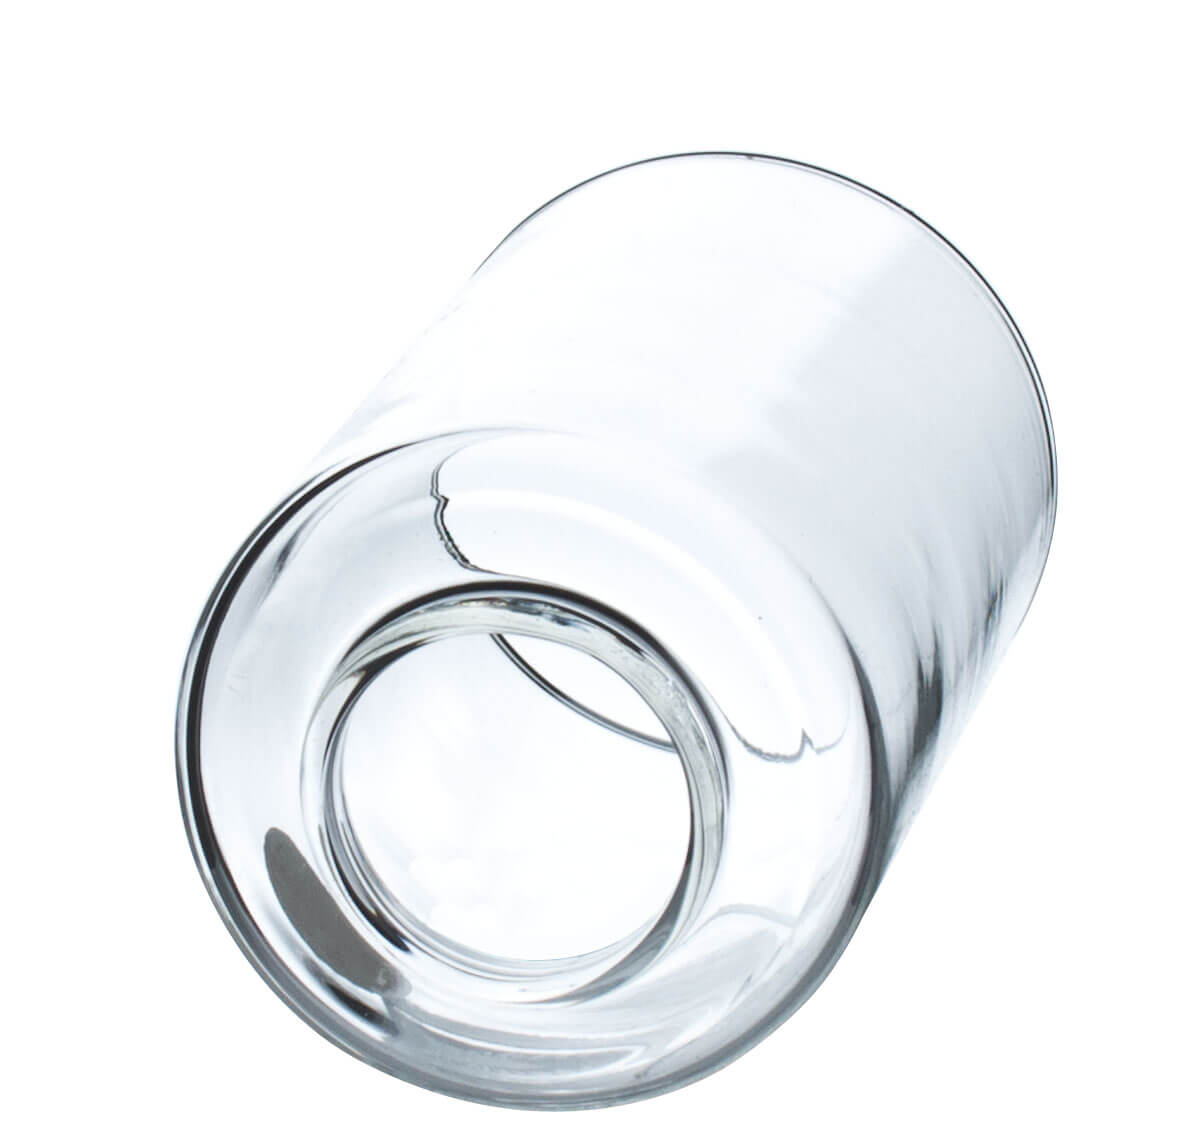 Filter cup for Hario cold dripper - borosilicate